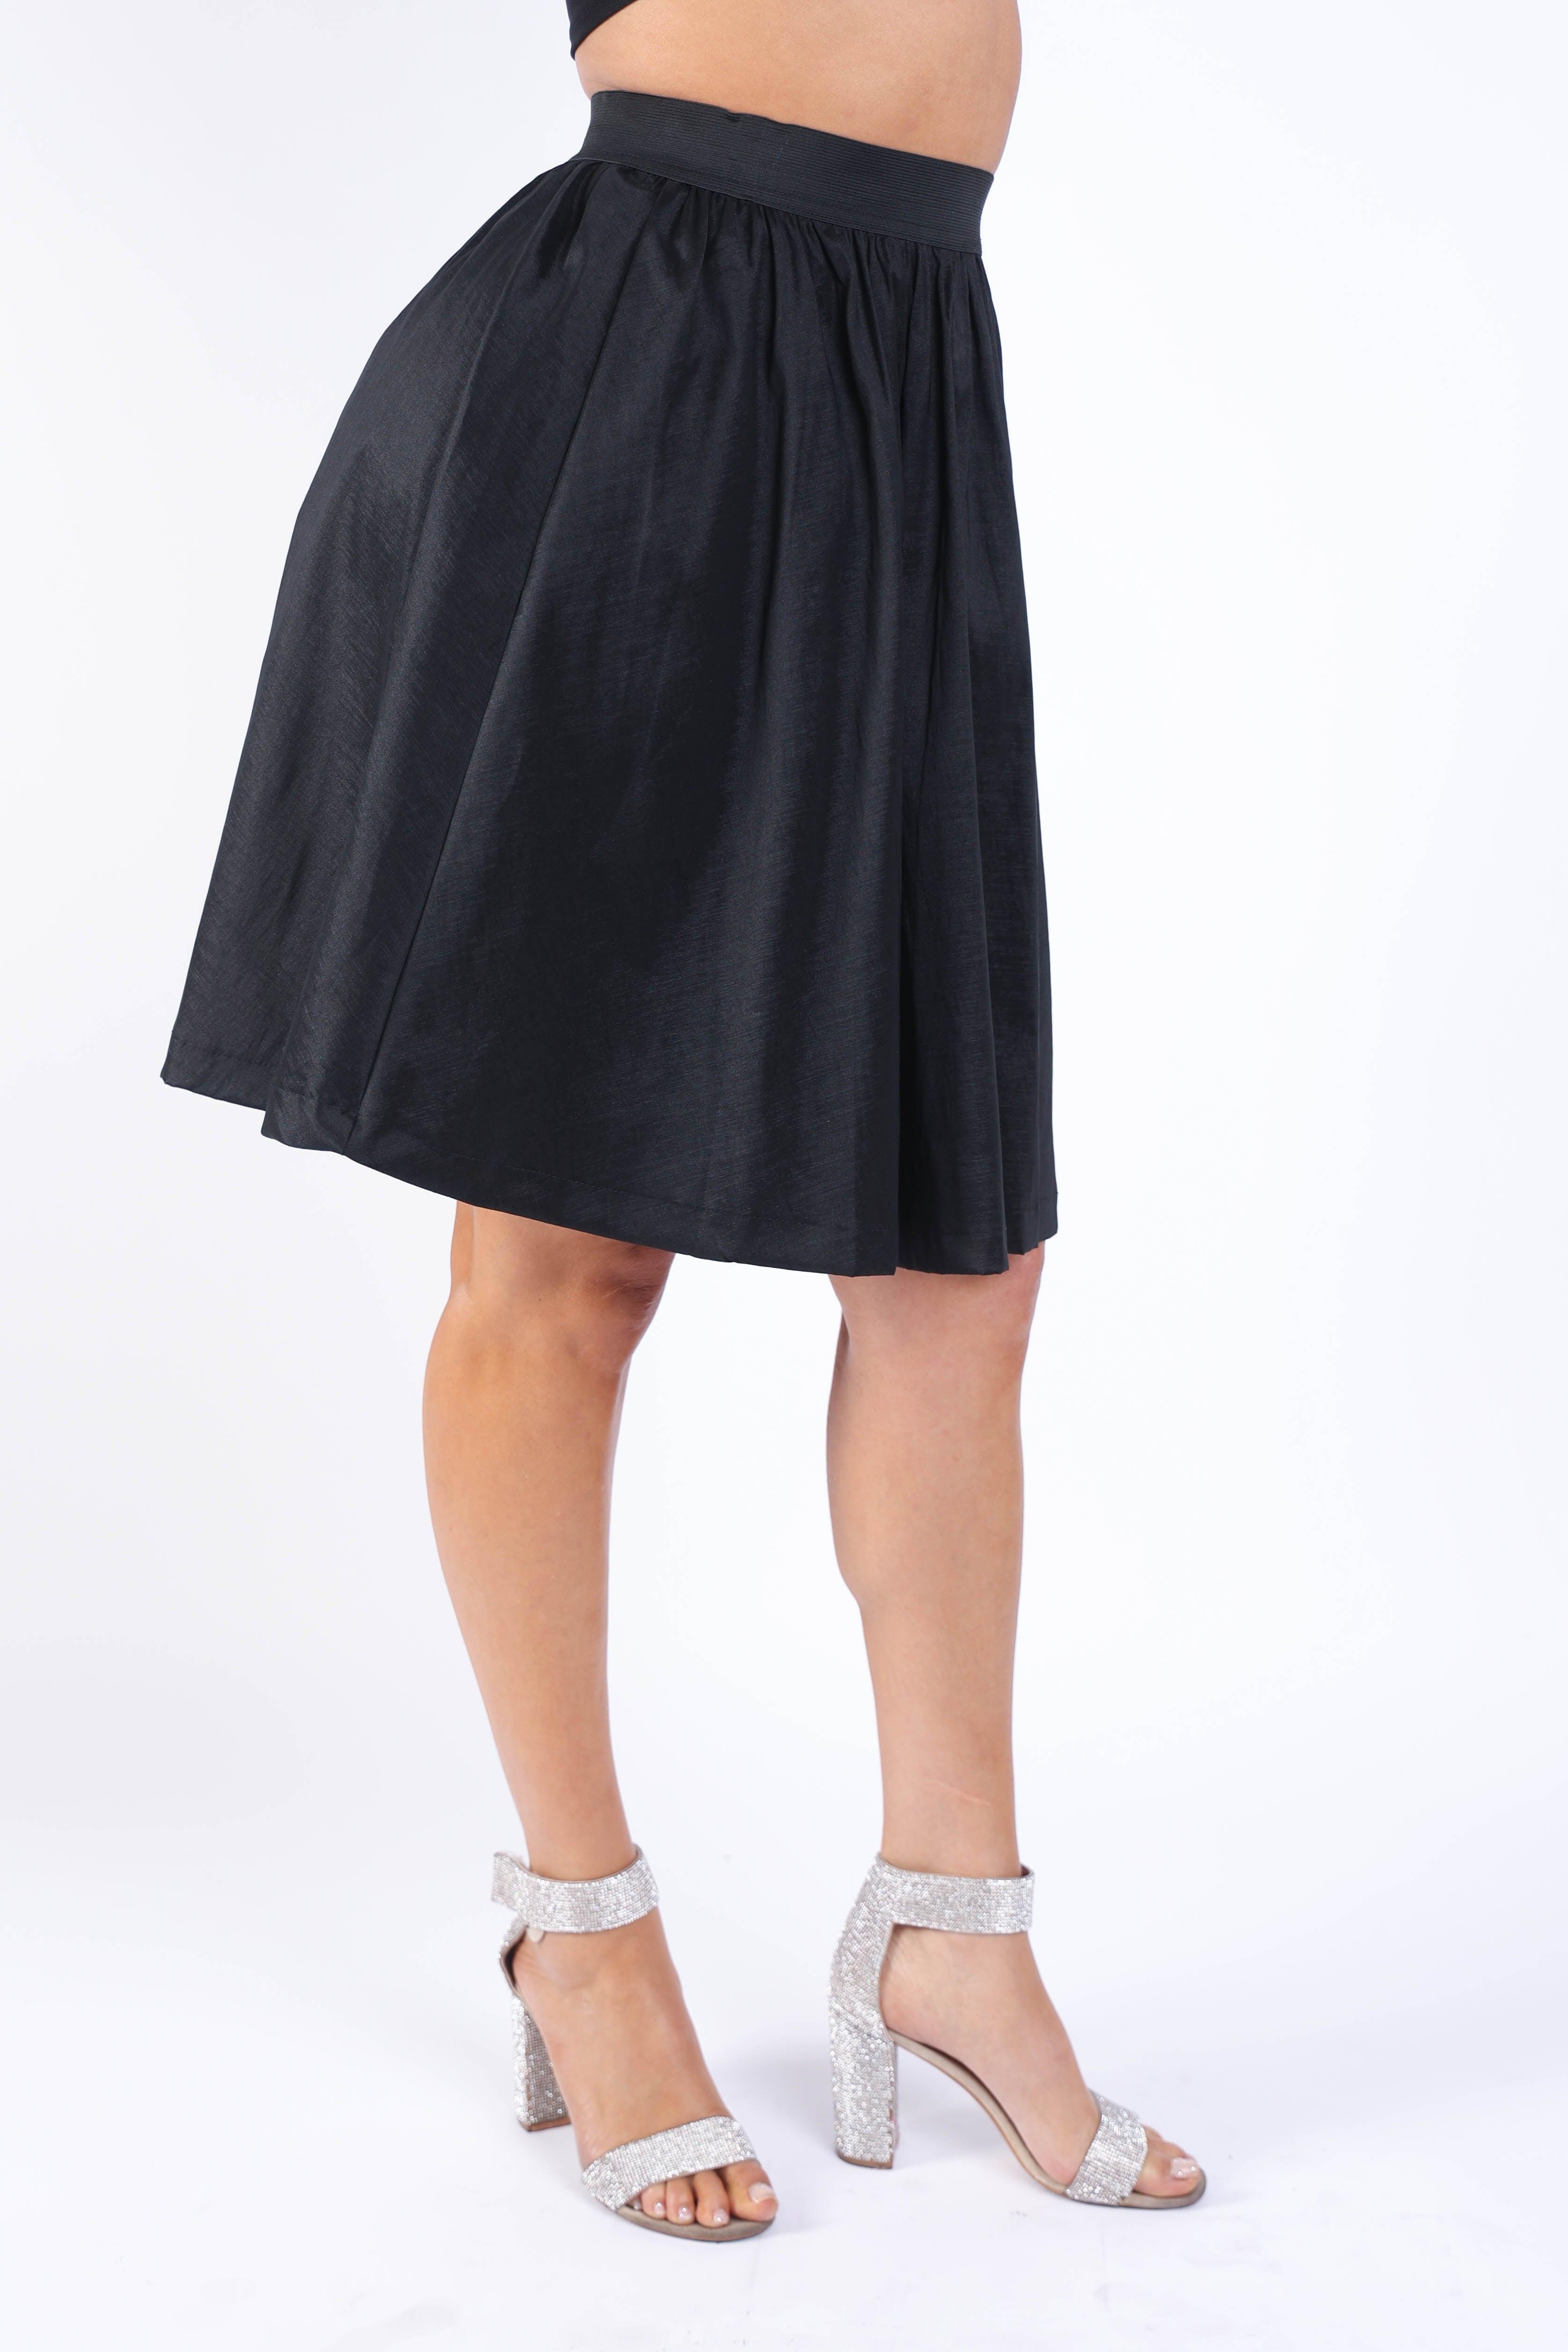 Women's Skirts Casual Elastic High Waist Pleated Midi Flare Black Skirt